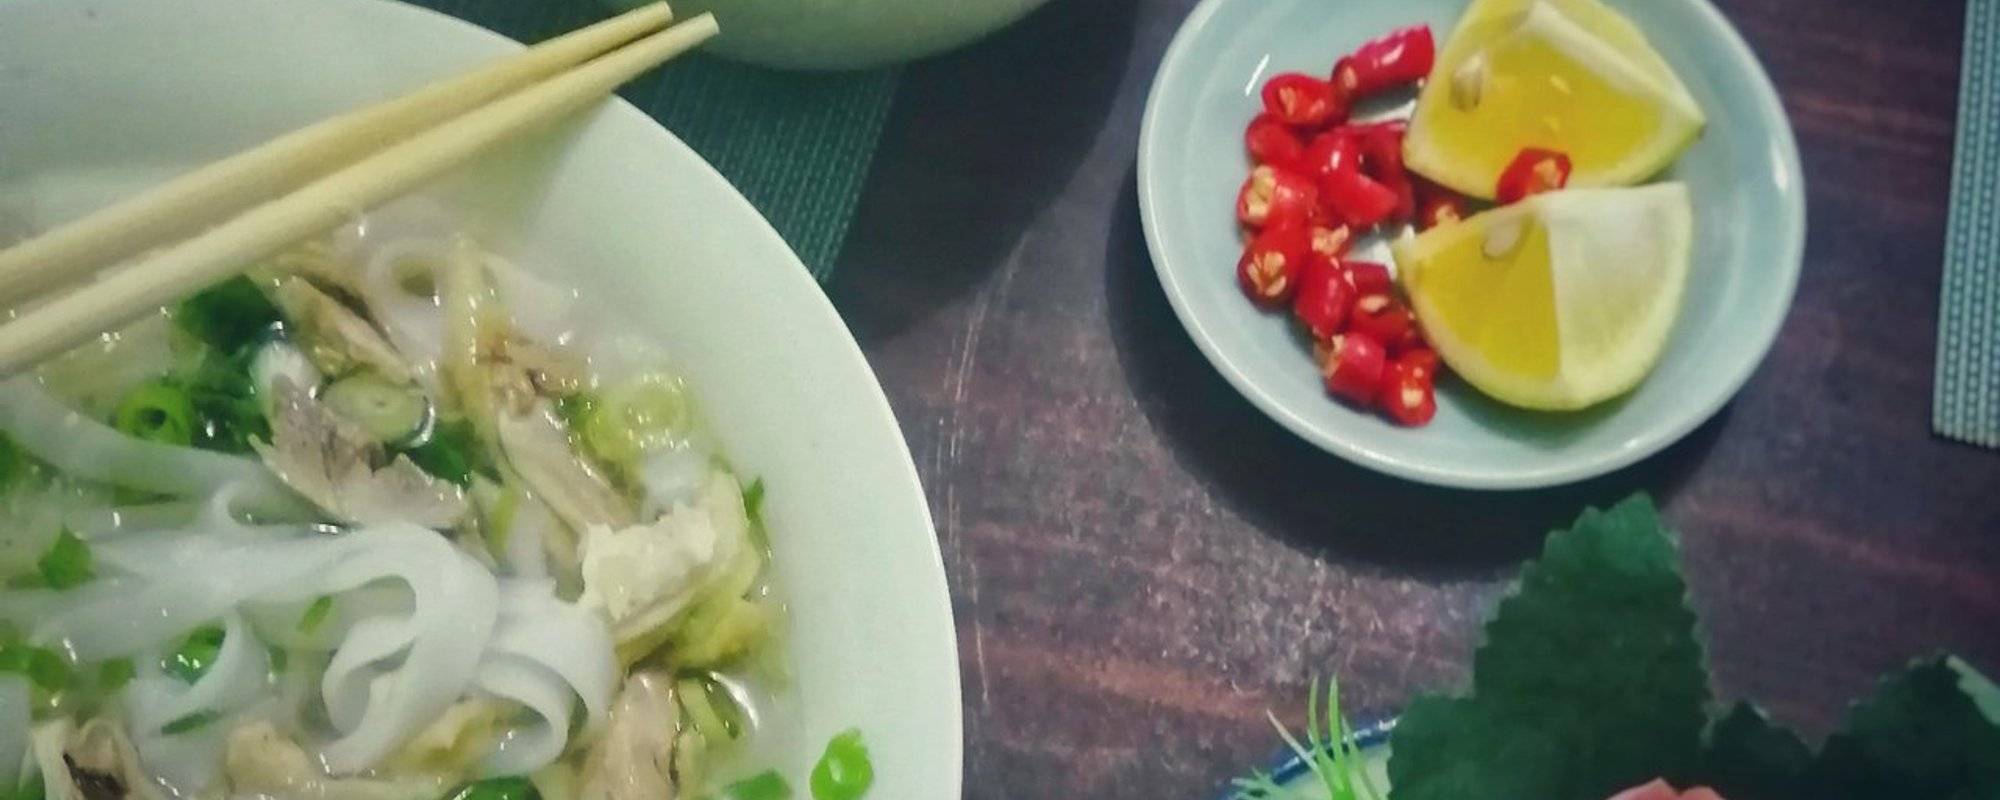 STEEM Food Tours #68: Pho Hanoi Authentic Vietnamese Cuisine - Baguio City, Philippines